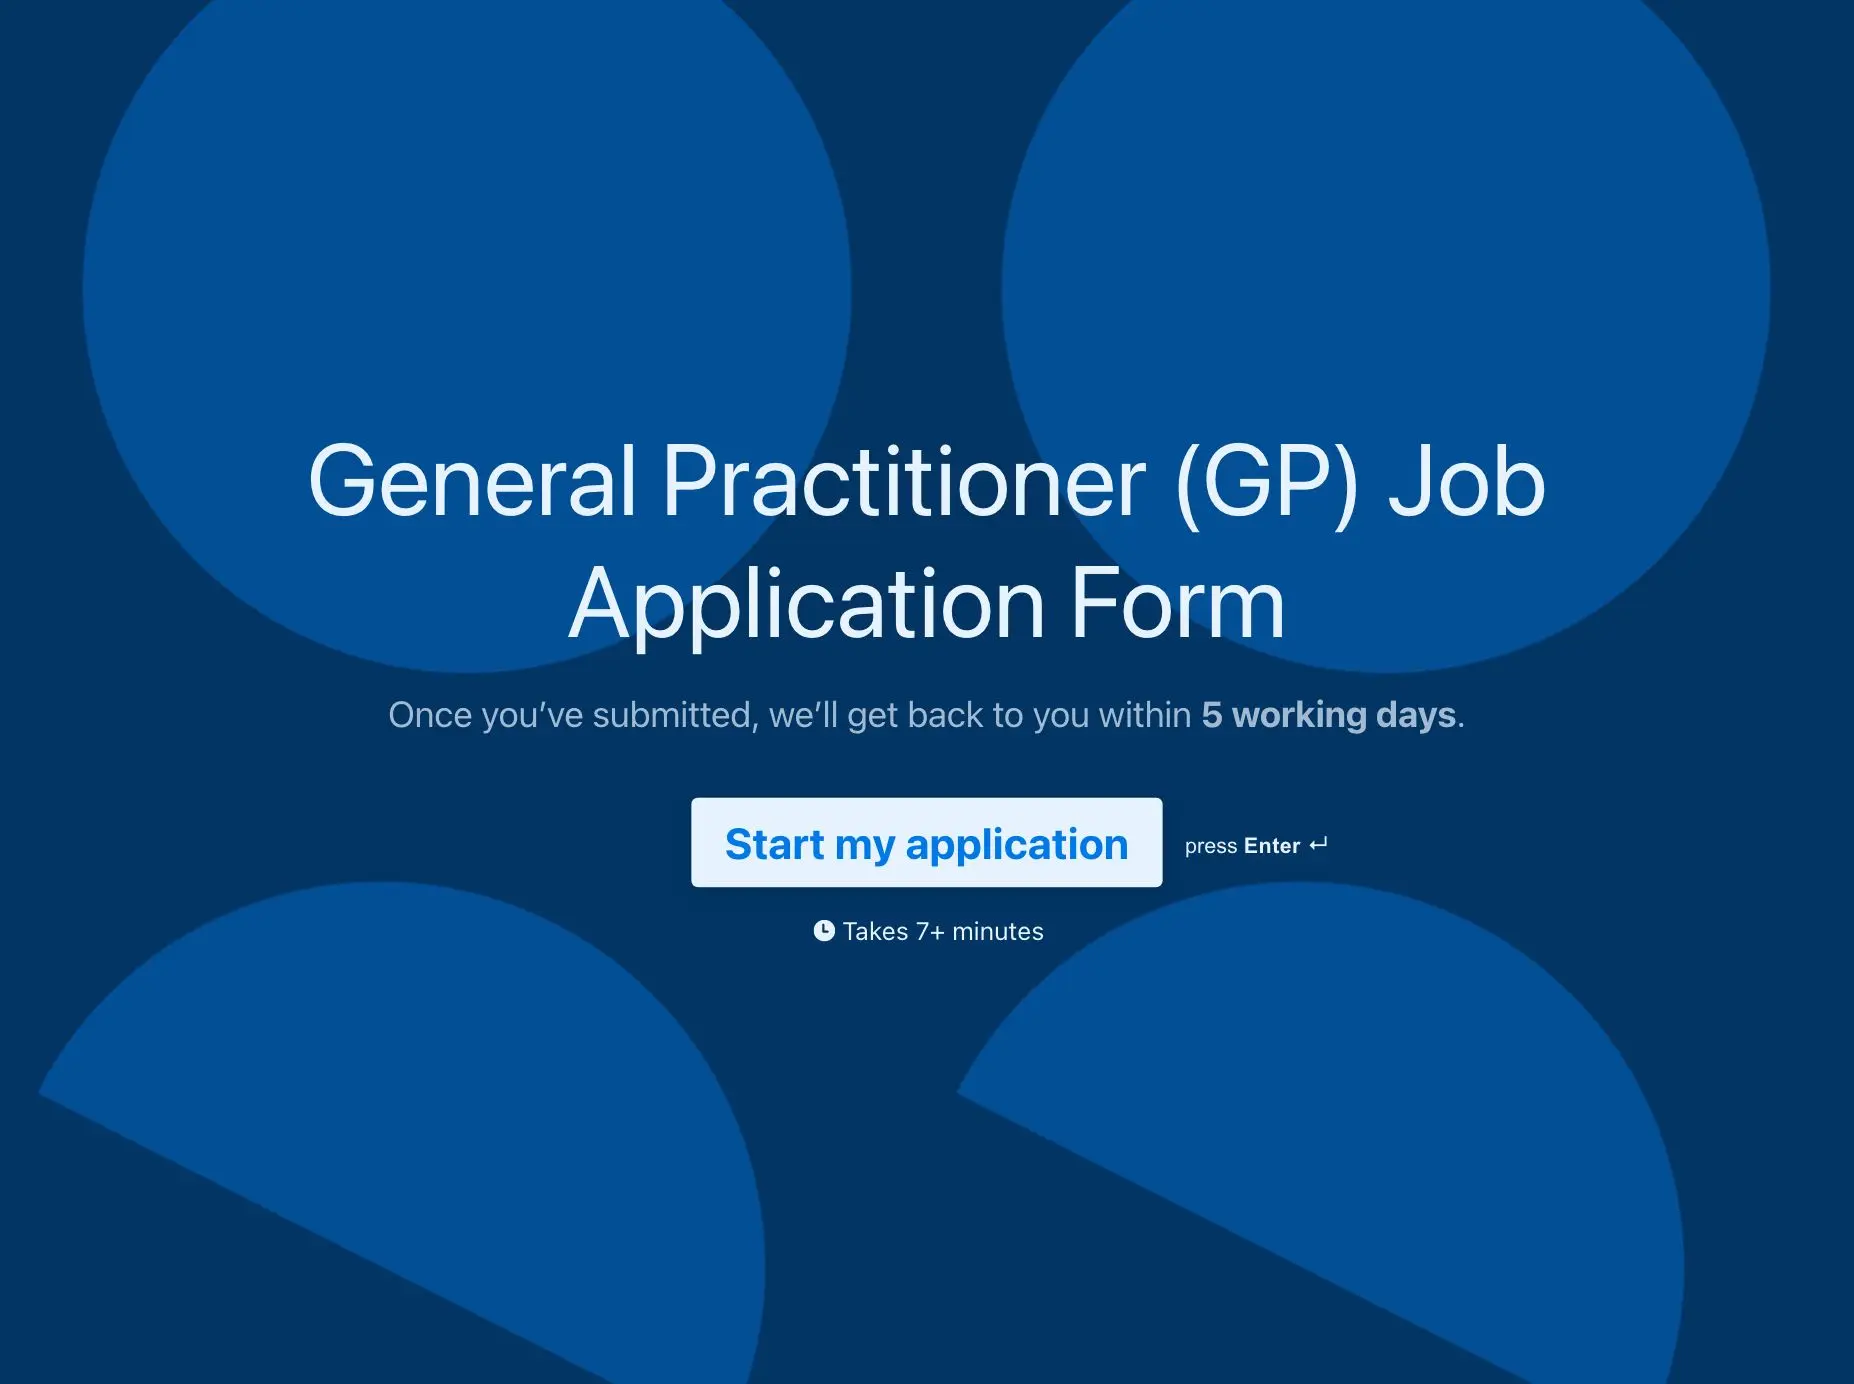 General Practitioner (GP) Job Application Form Template Hero